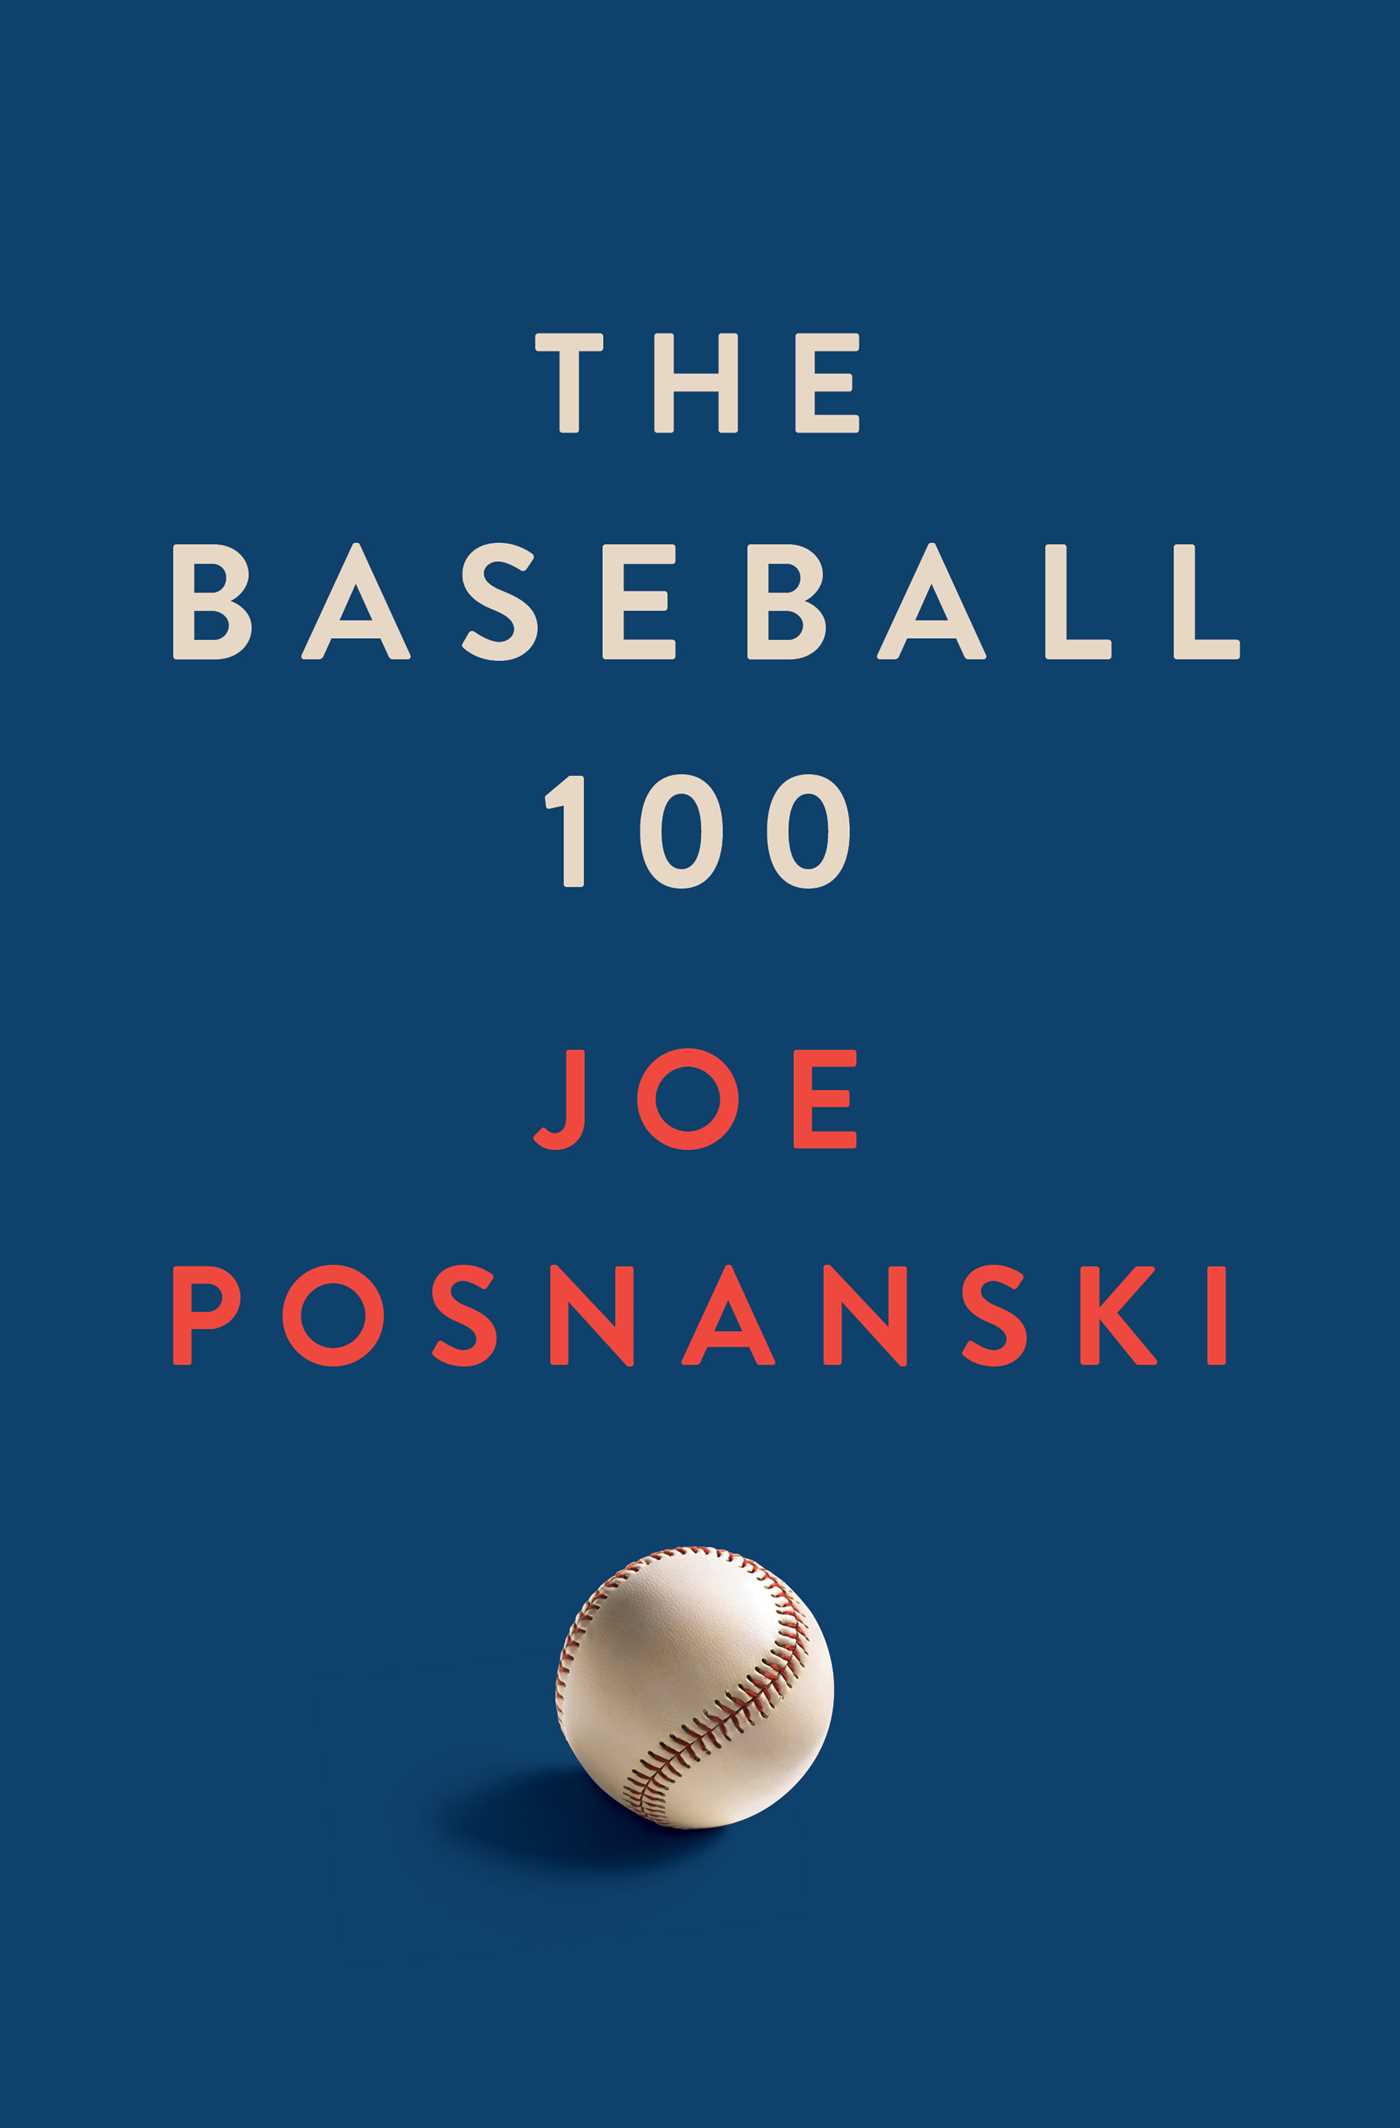 Image for "The Baseball 100"